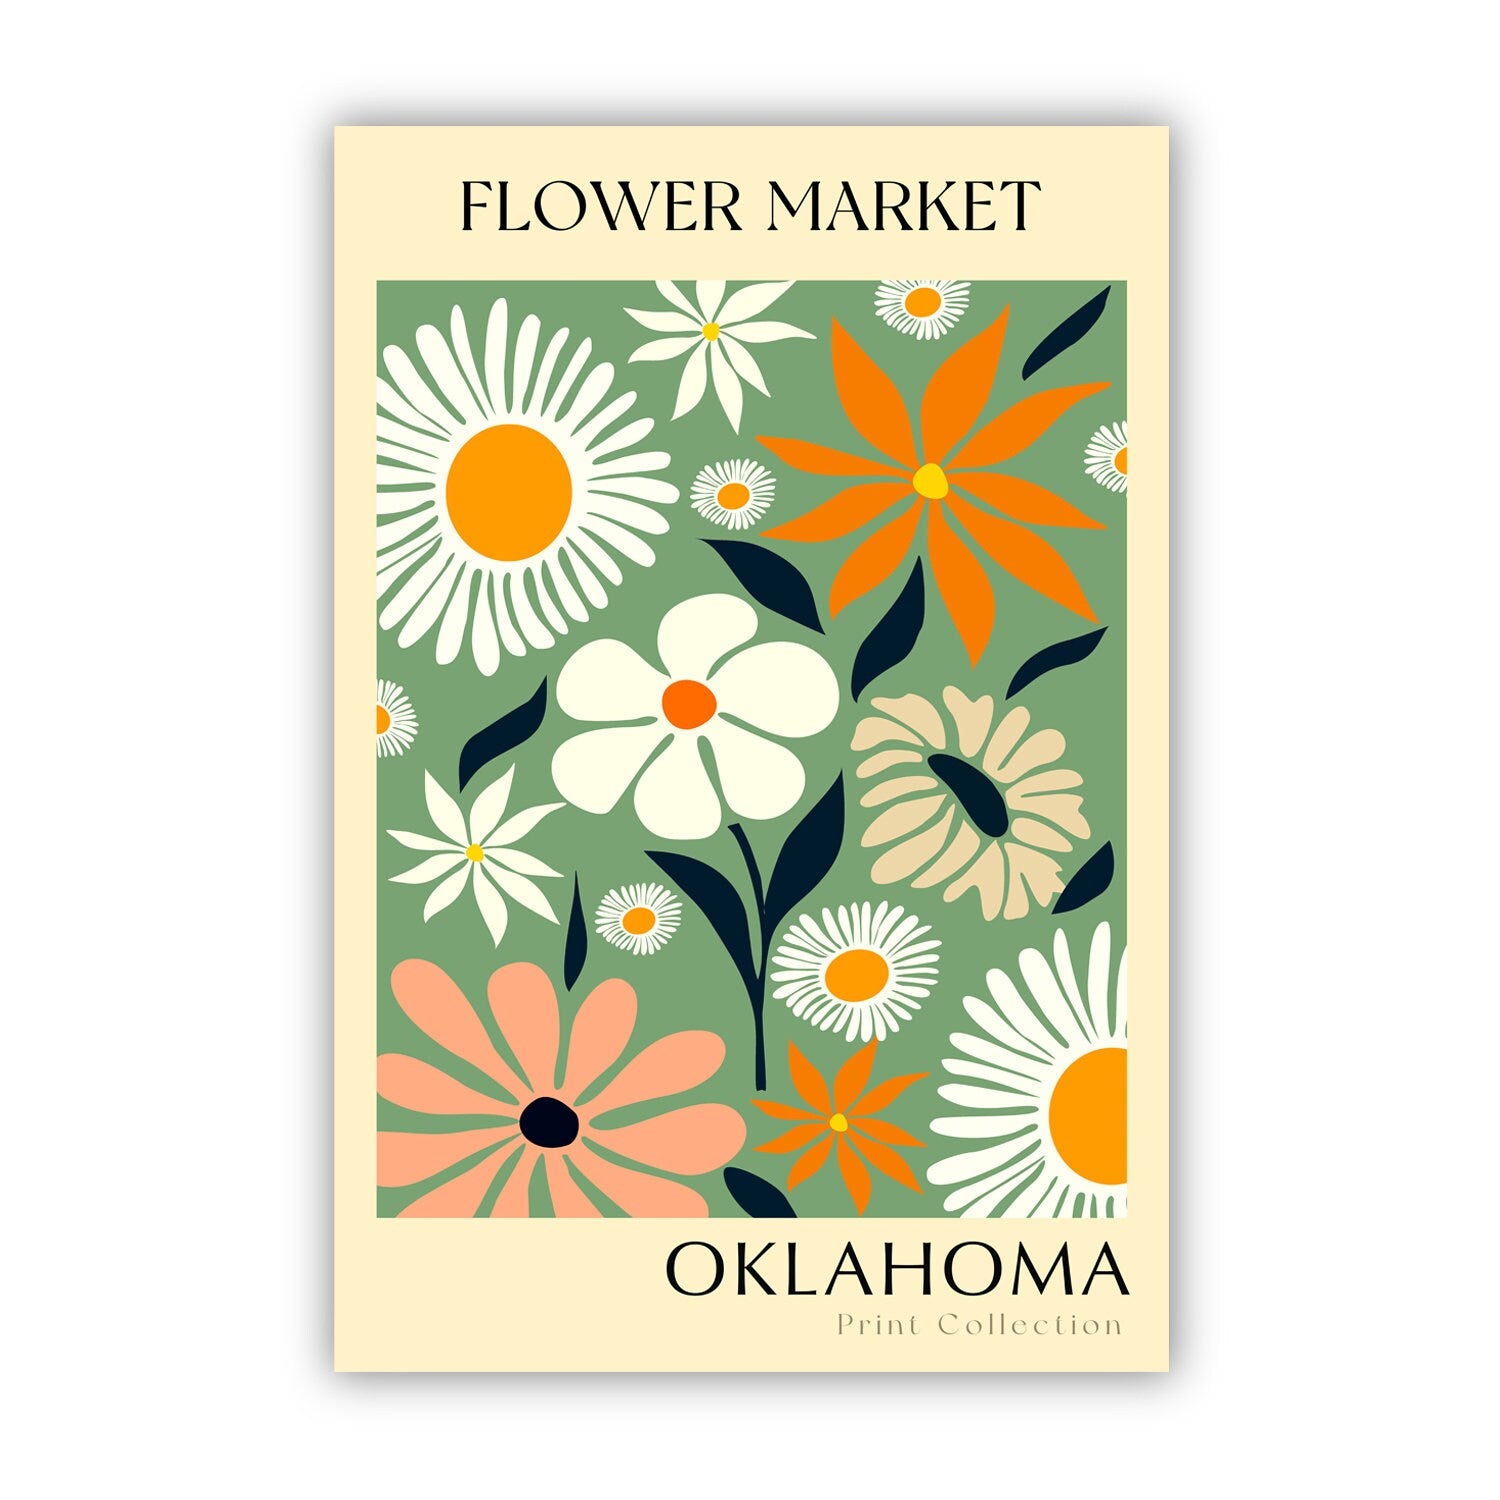 Oklahoma State flower print, USA states poster, Oklahoma flower market poster, Botanical poster, Nature poster artwork, Boho floral wall art